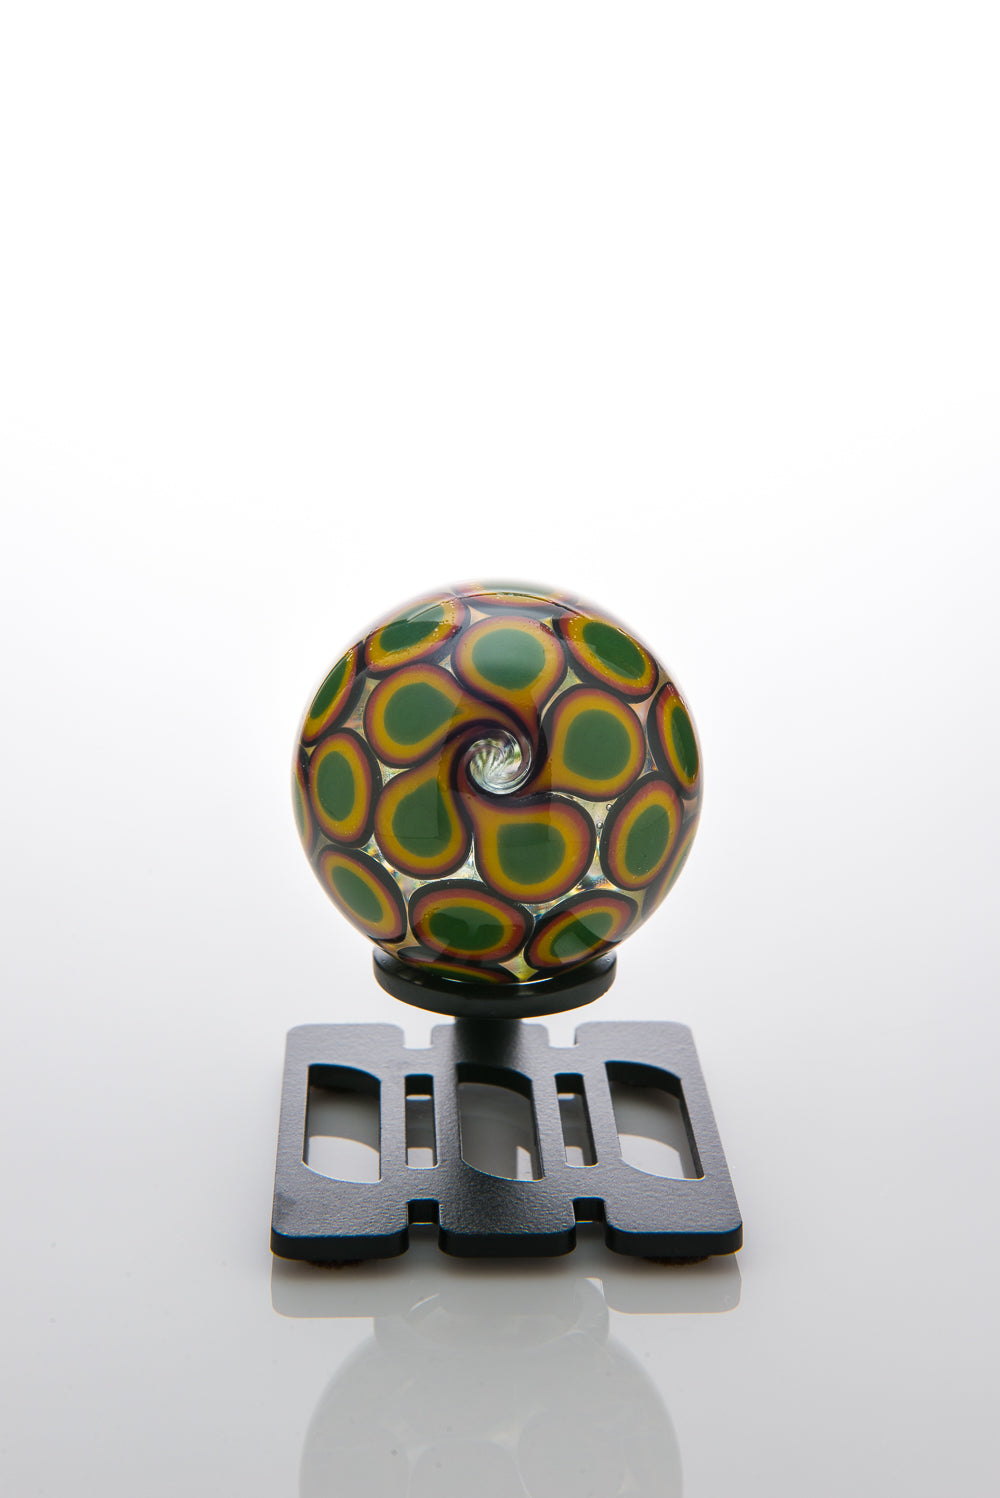 Tony Fusco Rasta Colored Retticello Marble with Worked Back